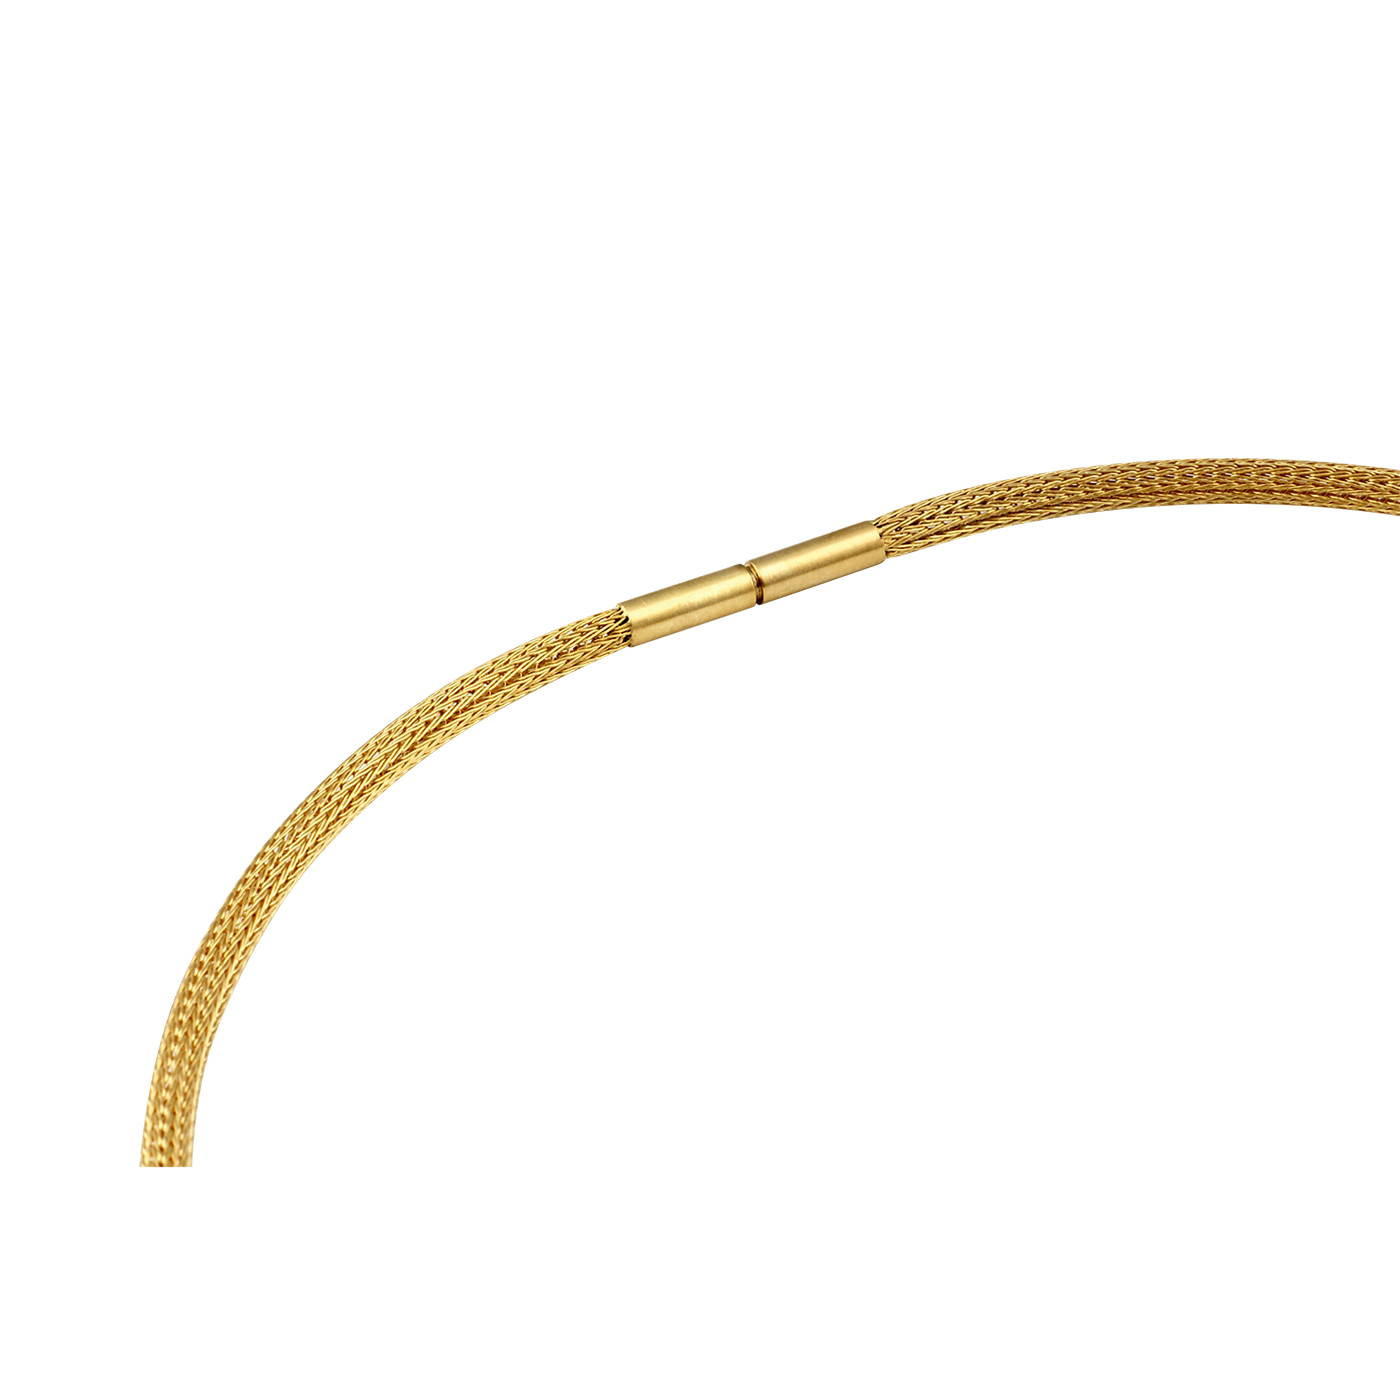 Halsreif "Calza", ES vergoldet, ø 3 mm, 40 cm, Bajonett - 1 Stück